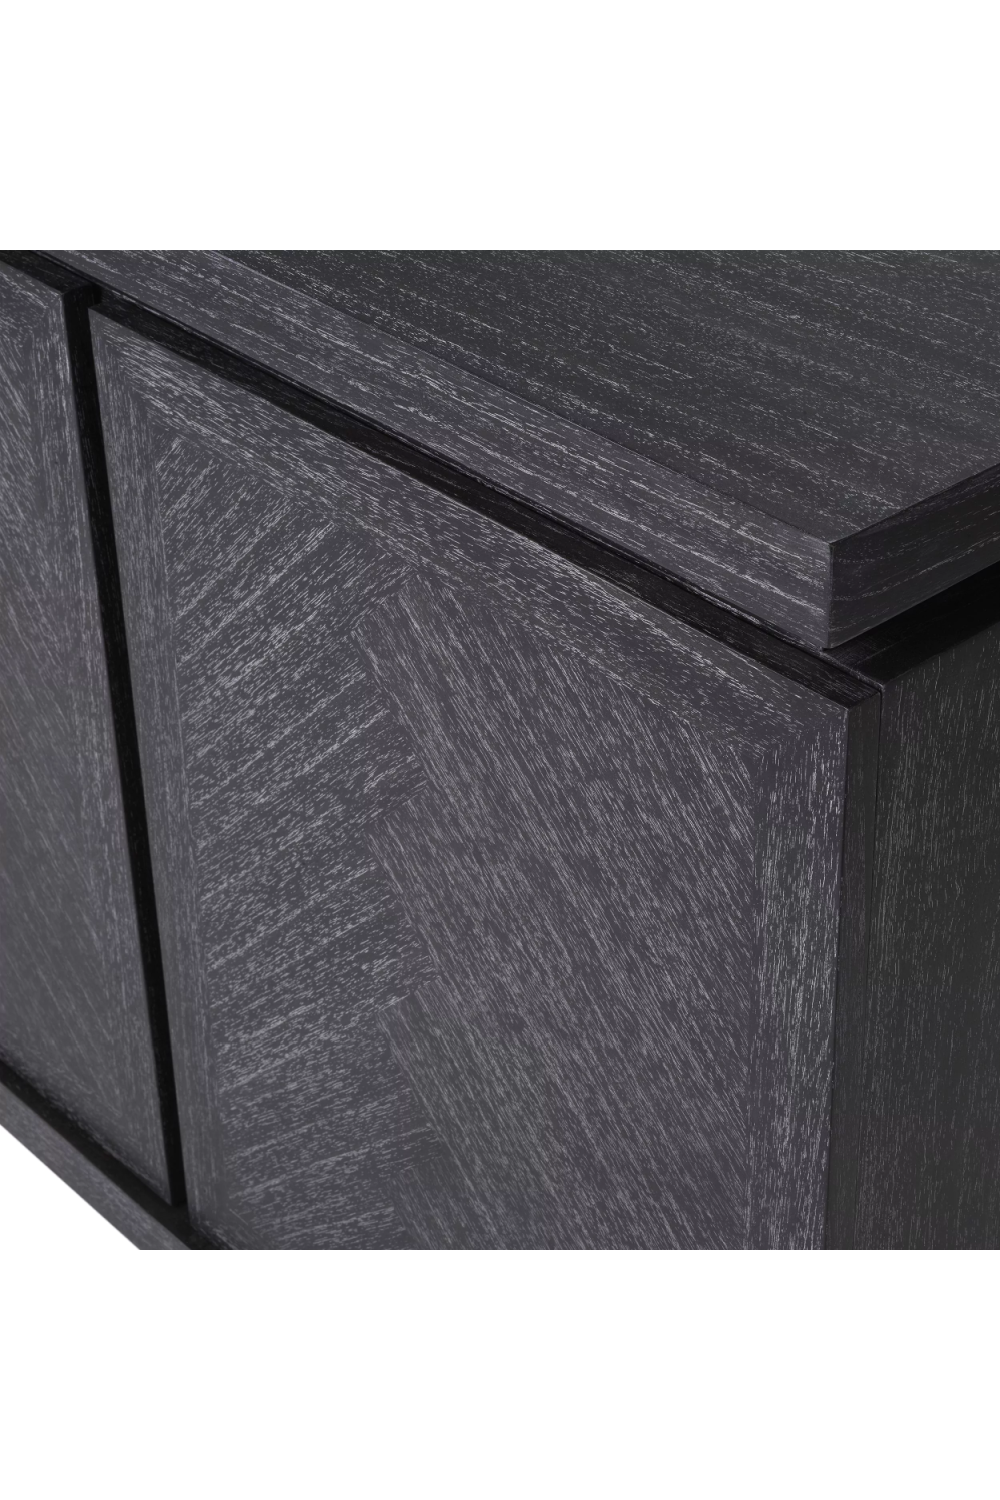 Charcoal Gray Oak Sideboard | Eichholtz Bowen | OROA.com